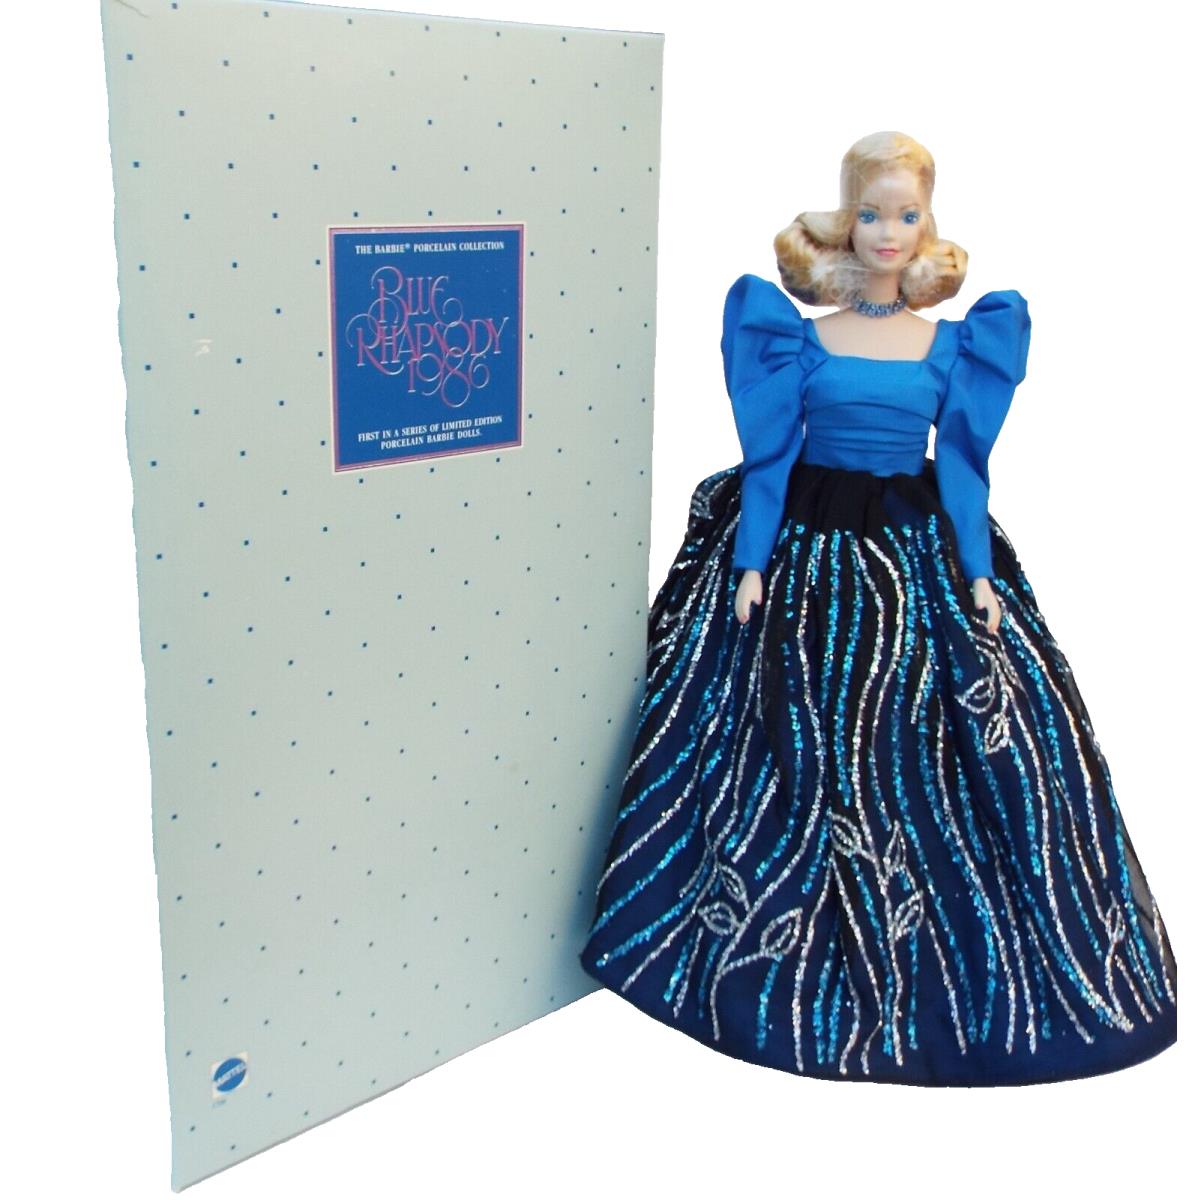 Fao Schwarz Barbie Porcelain Doll Blue Rhapsody 01419 1986 Mib Art